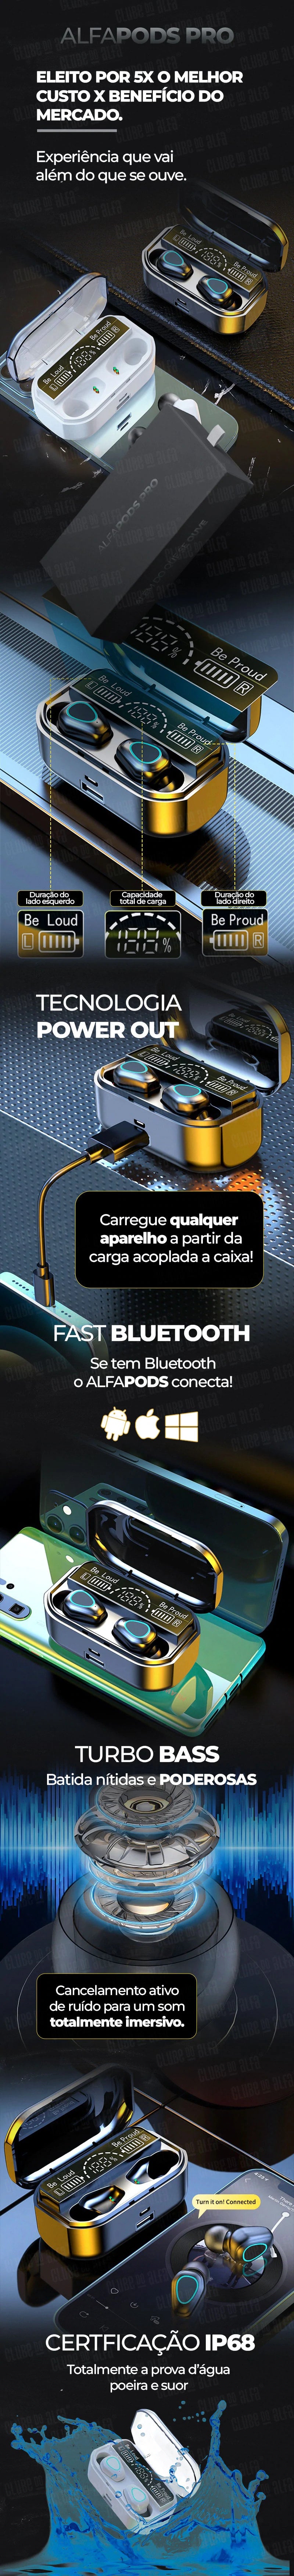 Fone Bluetooth à Prova d’água AlphaPod Pro Experiência única